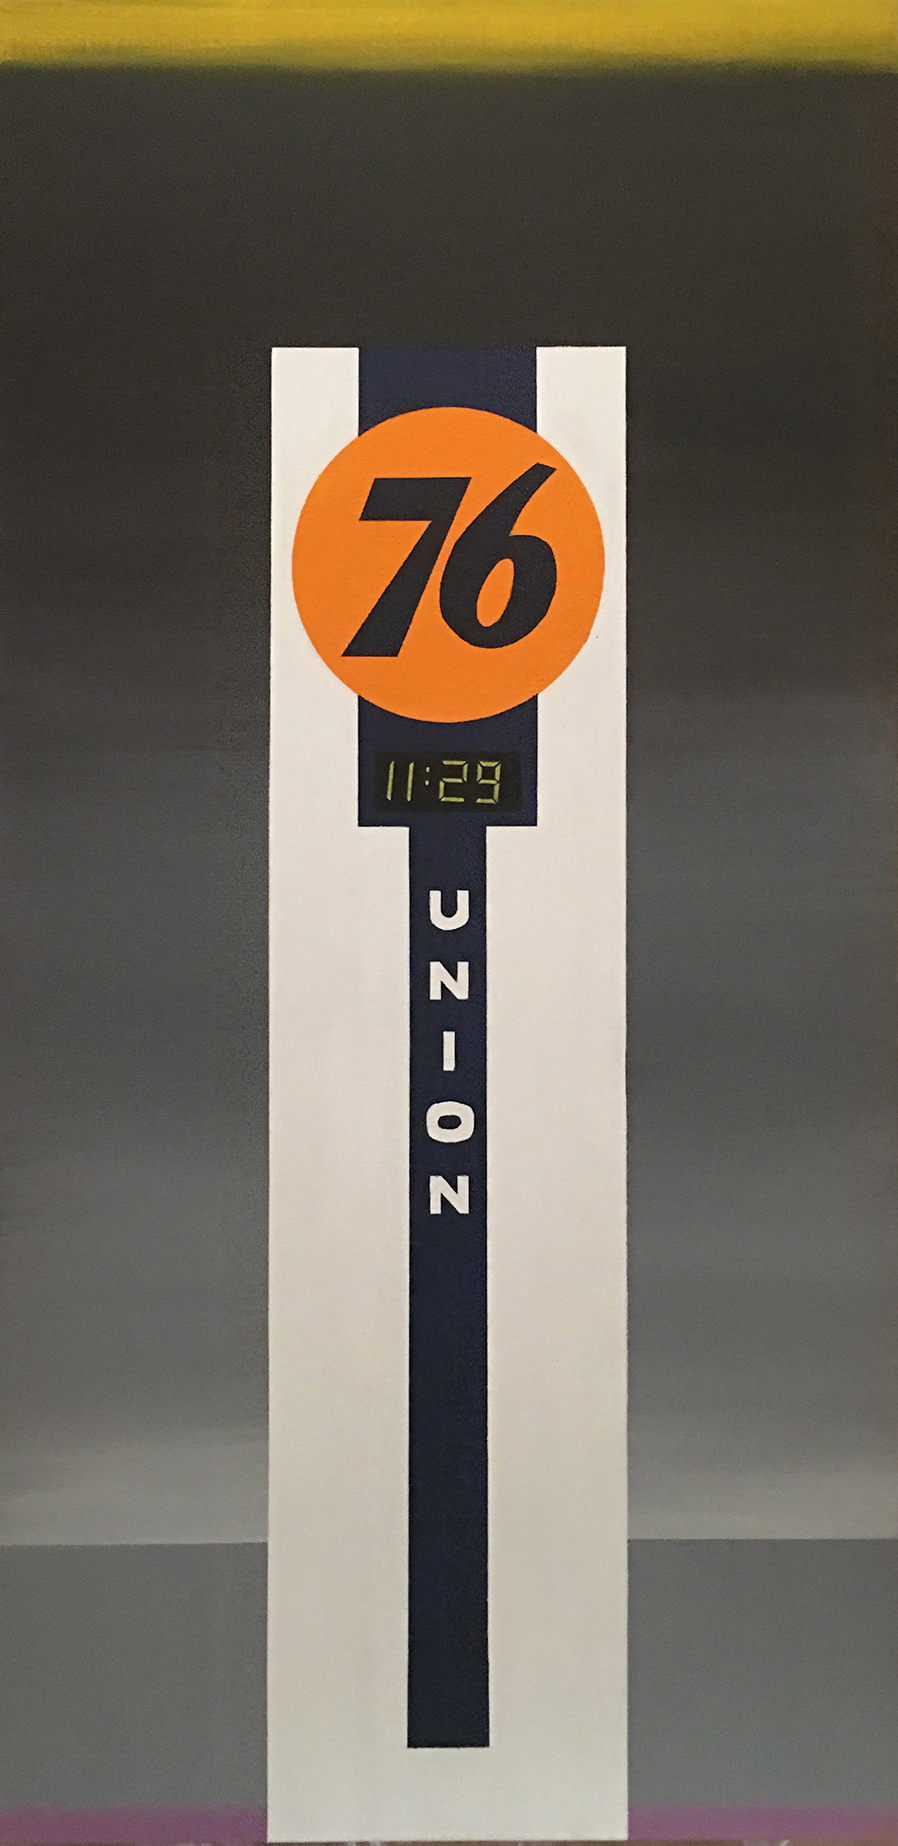 Union 76